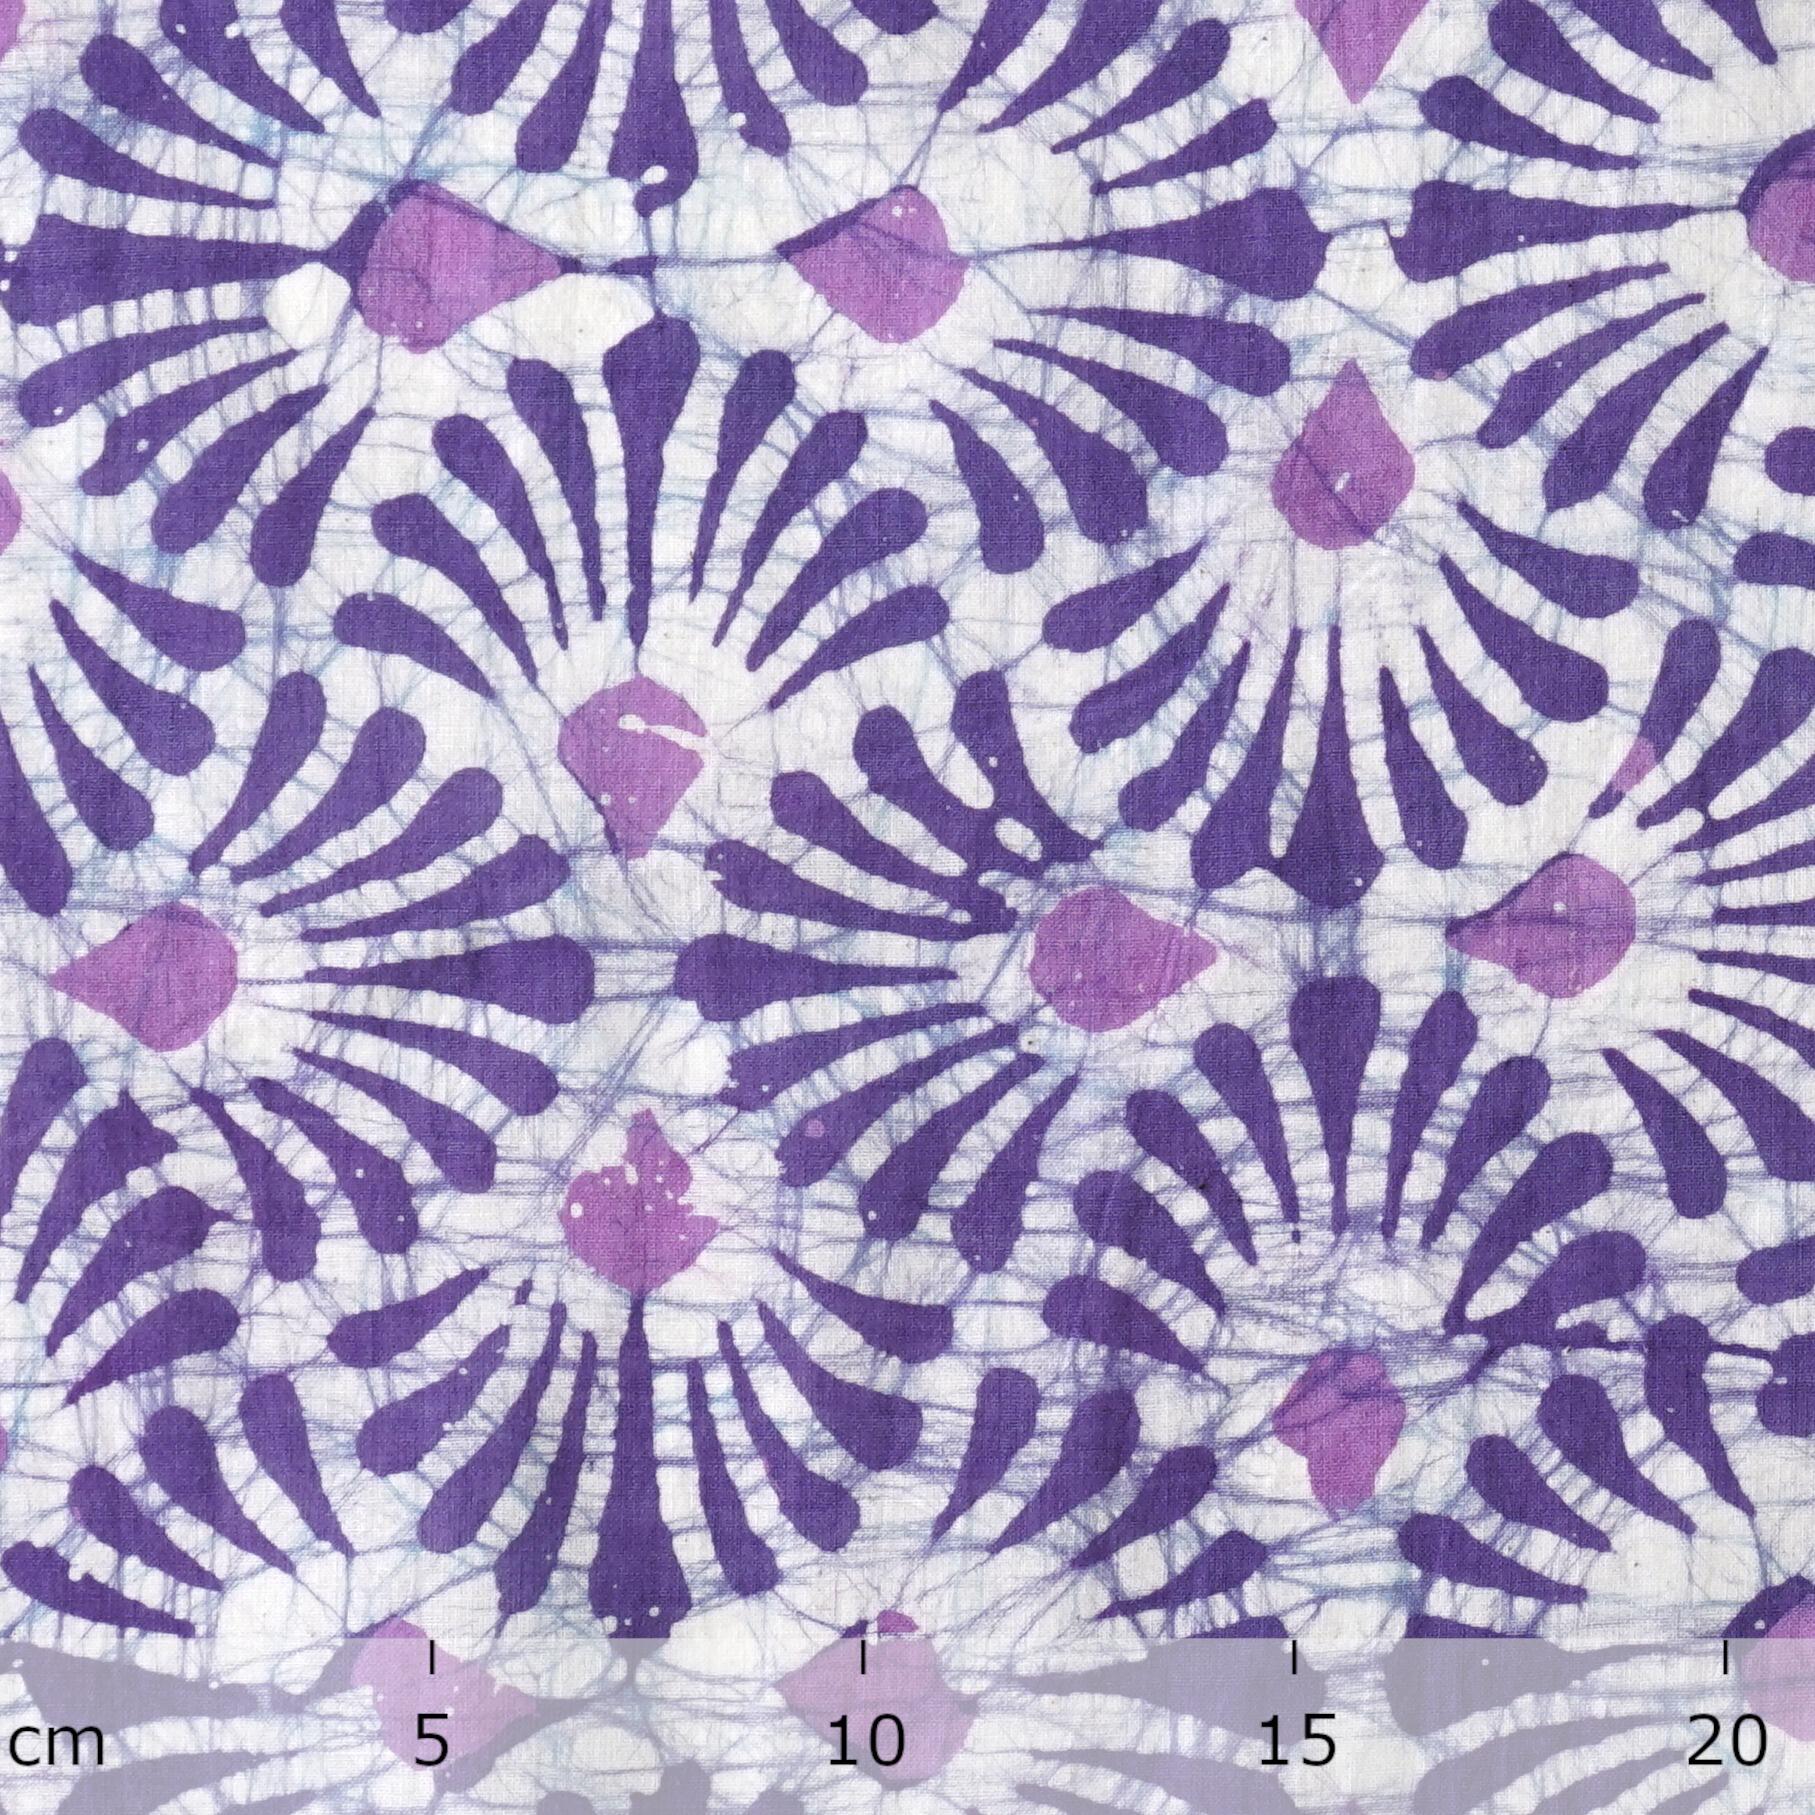 100% Block-Printed Batik Cotton Fabric From India - Castanets Design - Purple Reactive Dye - Ruler